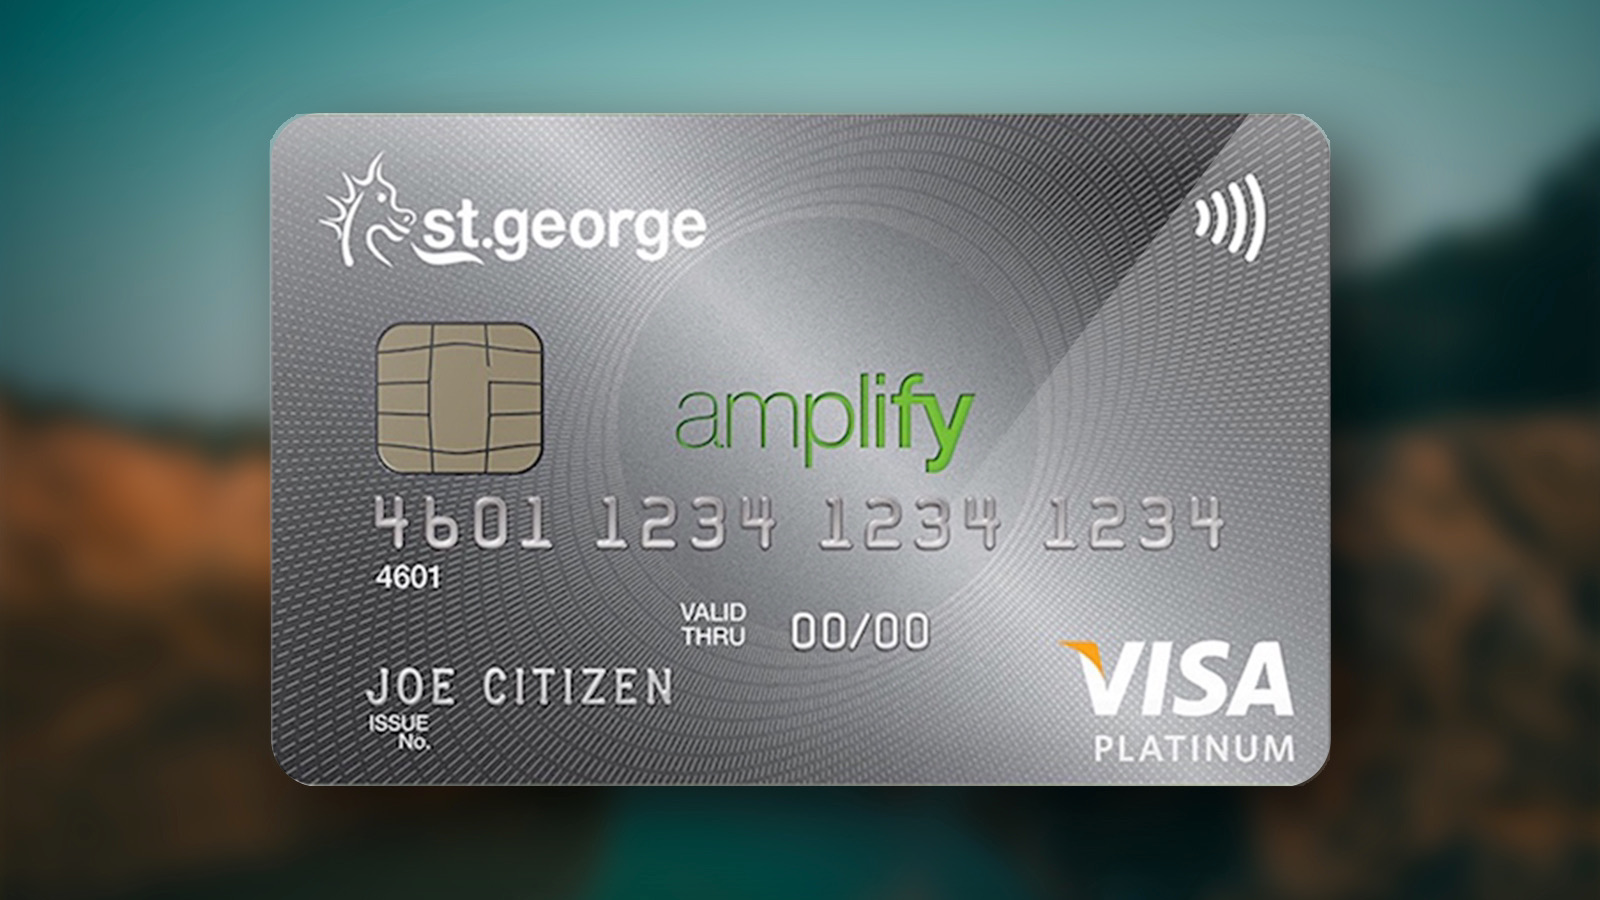 The St.George Amplify Platinum Credit Card